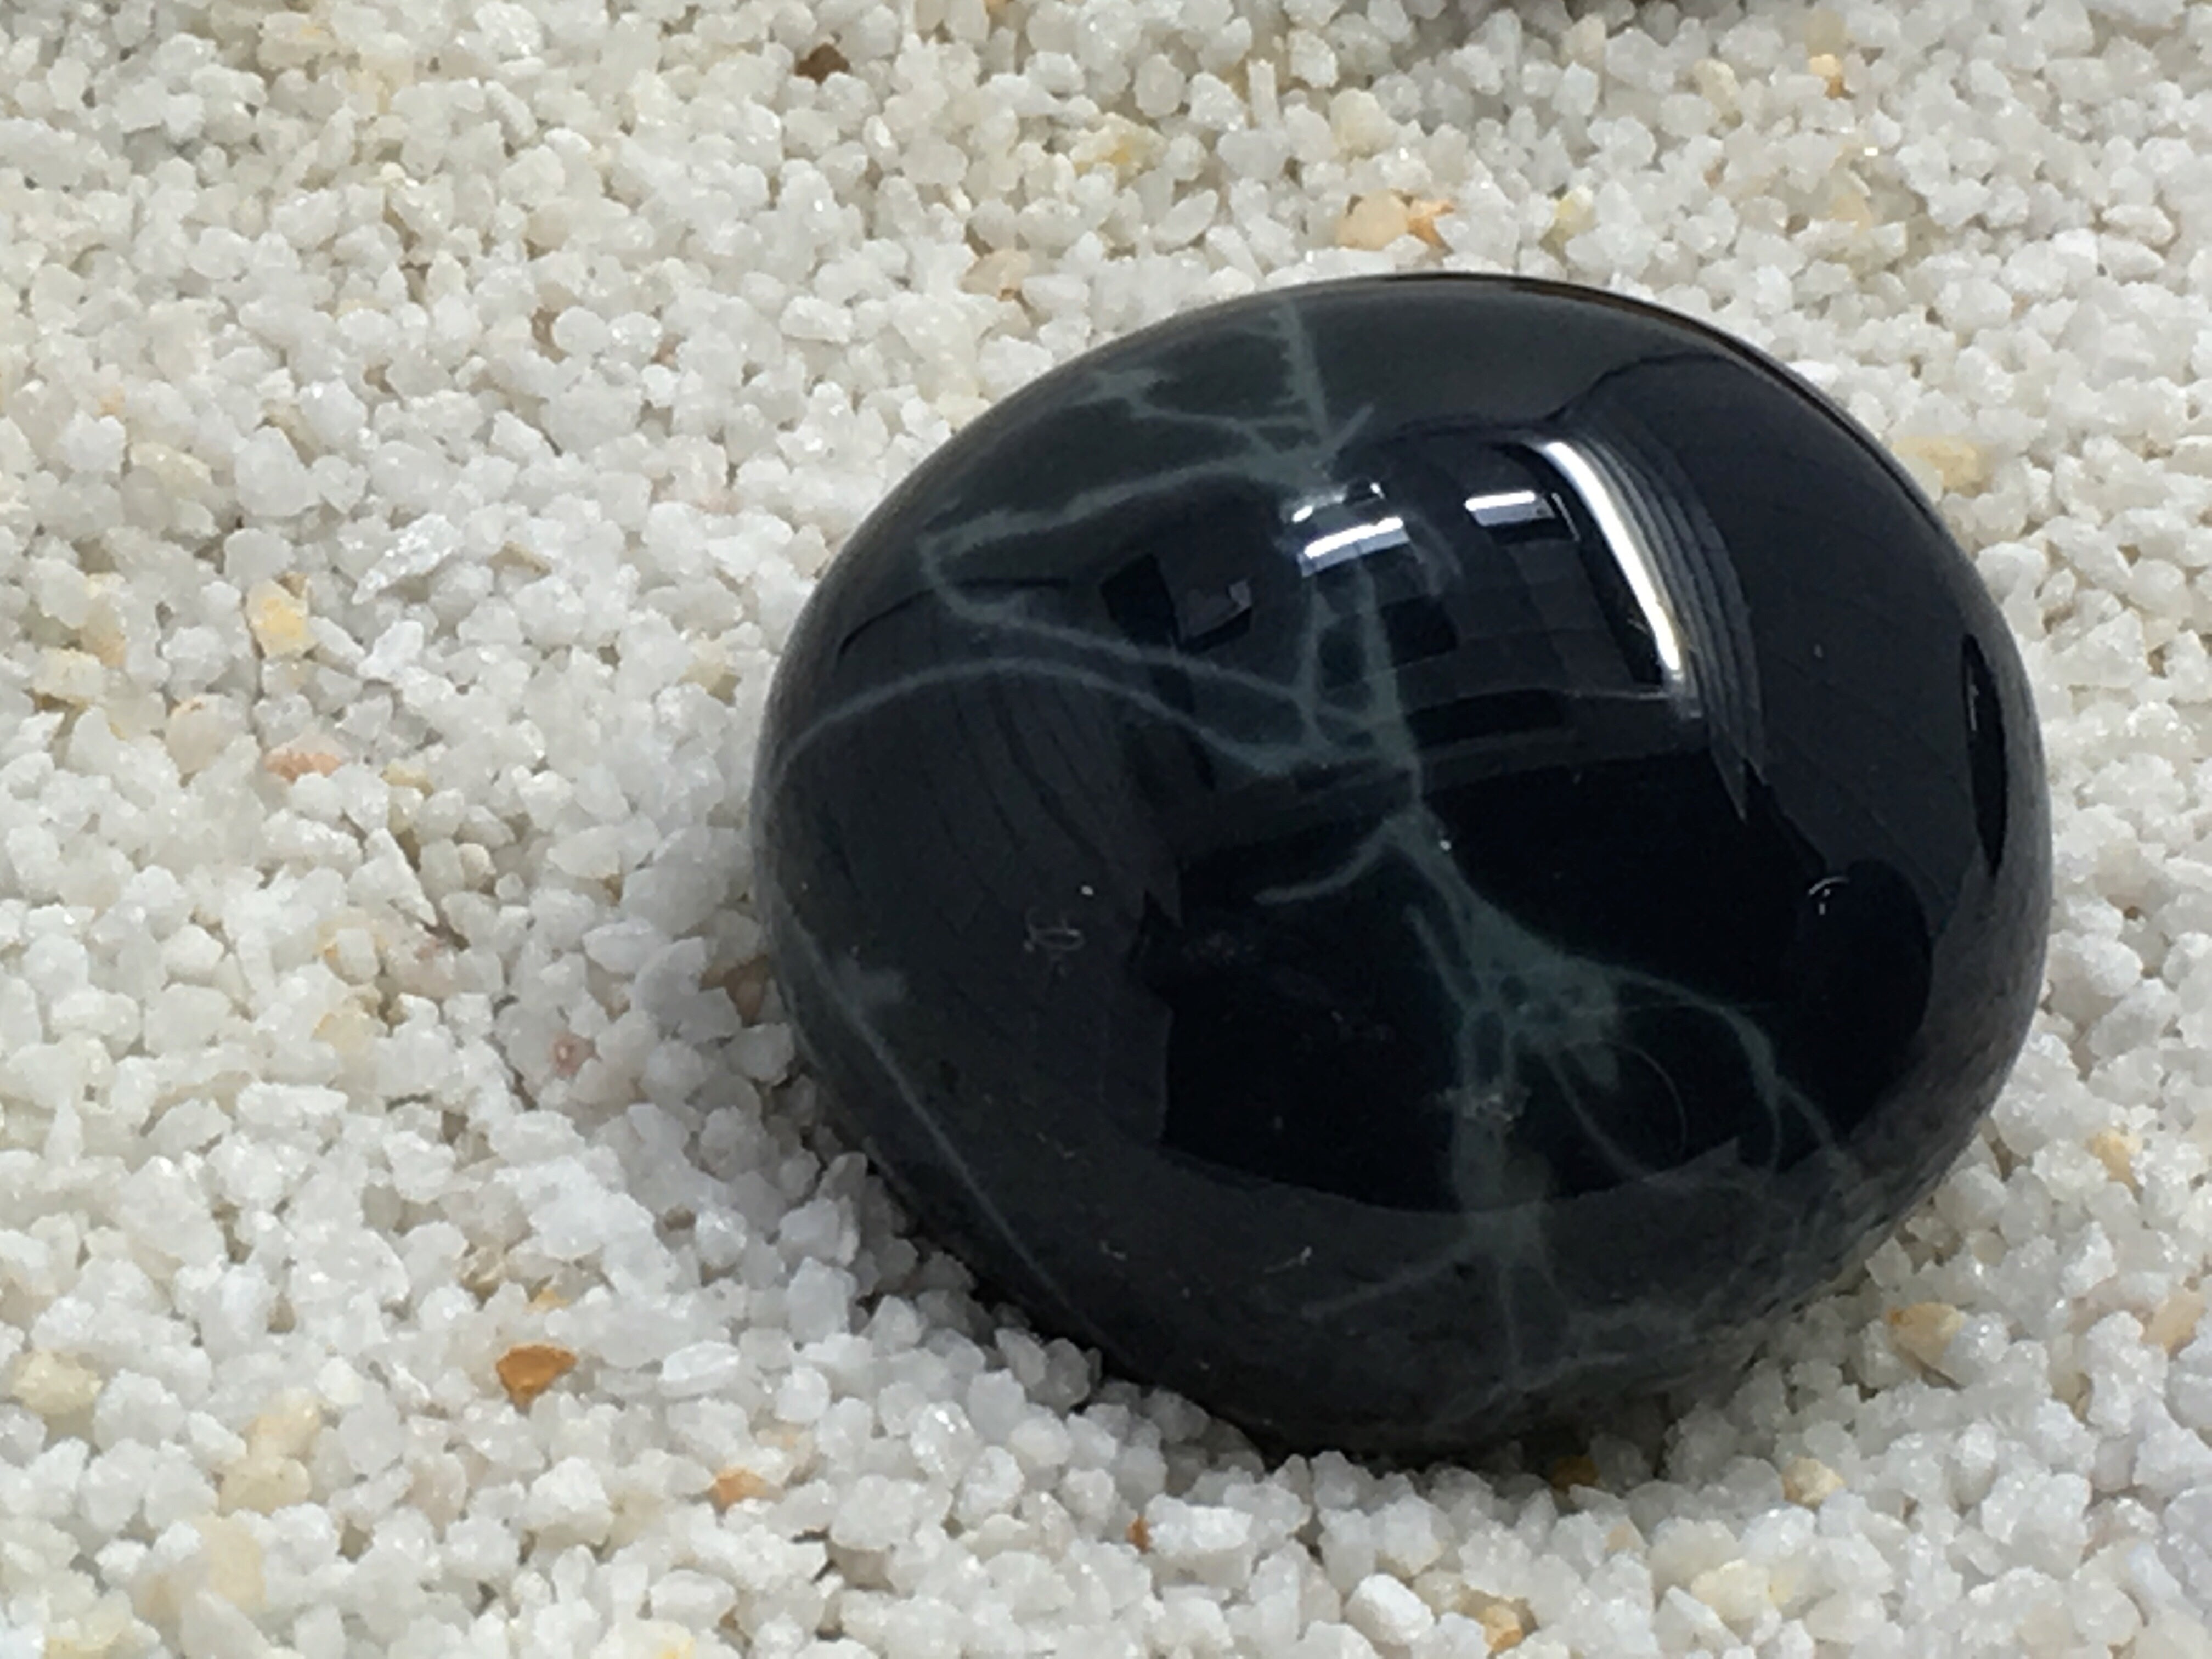 Obsidian Spider: Pebble